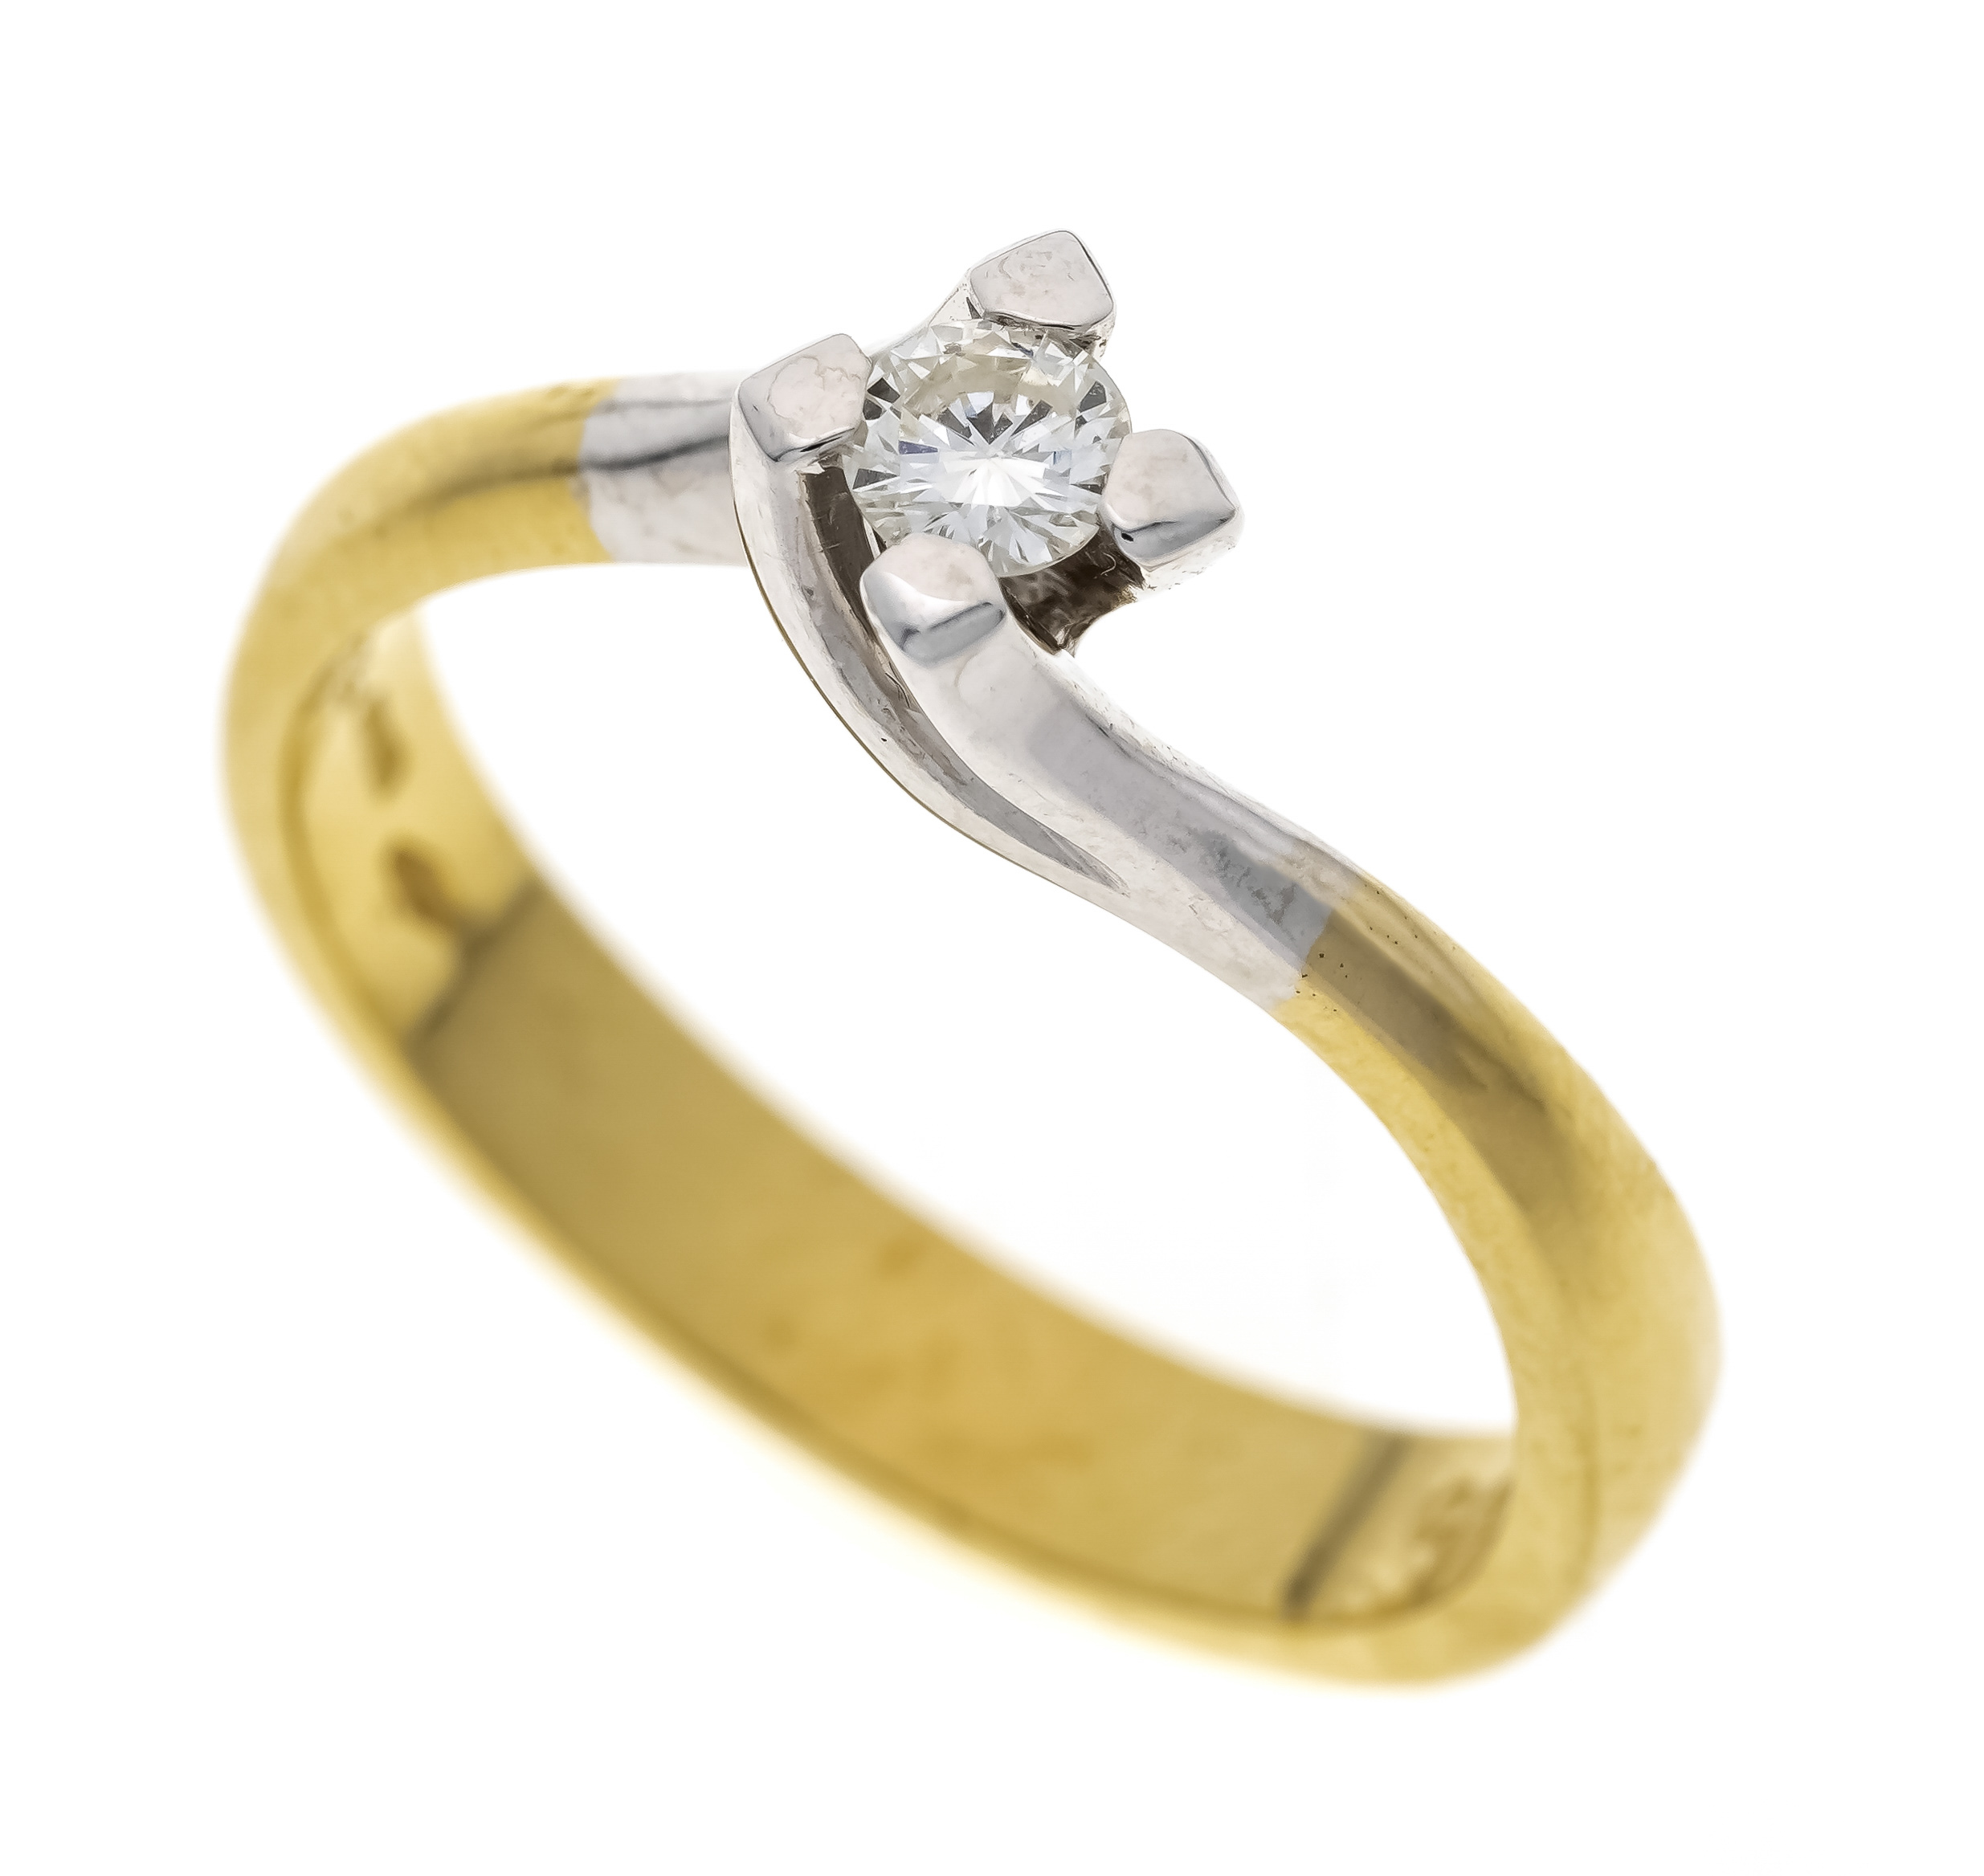 Diamond ring GG 750/000 with a brilliant-cut diamond 0.15 ct l.tintedW/VS, RG 55, 4.6 g